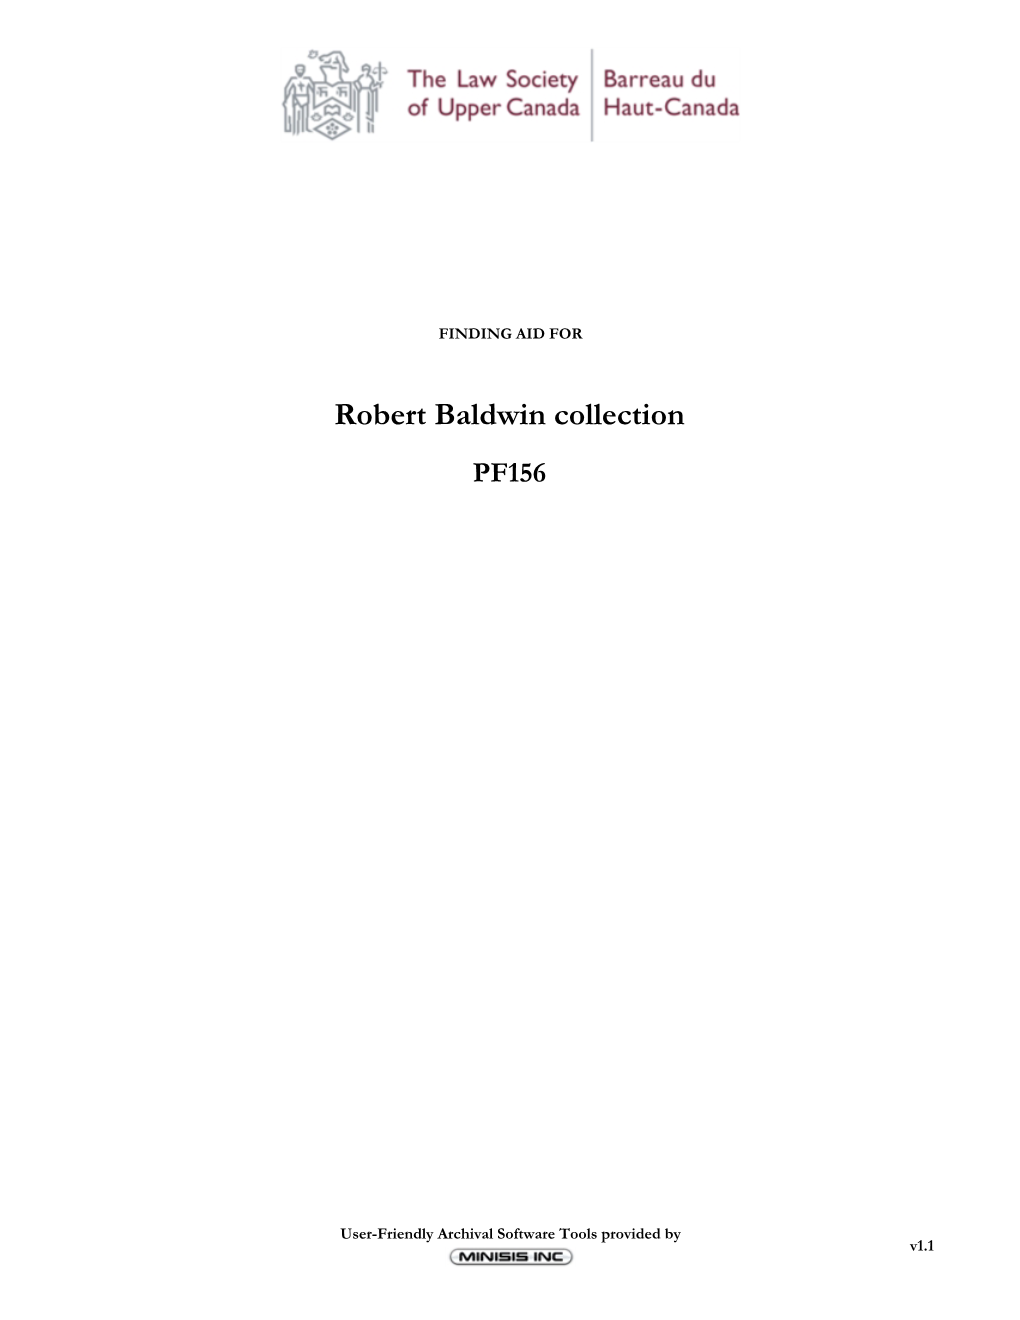 Robert Baldwin Collection PF156